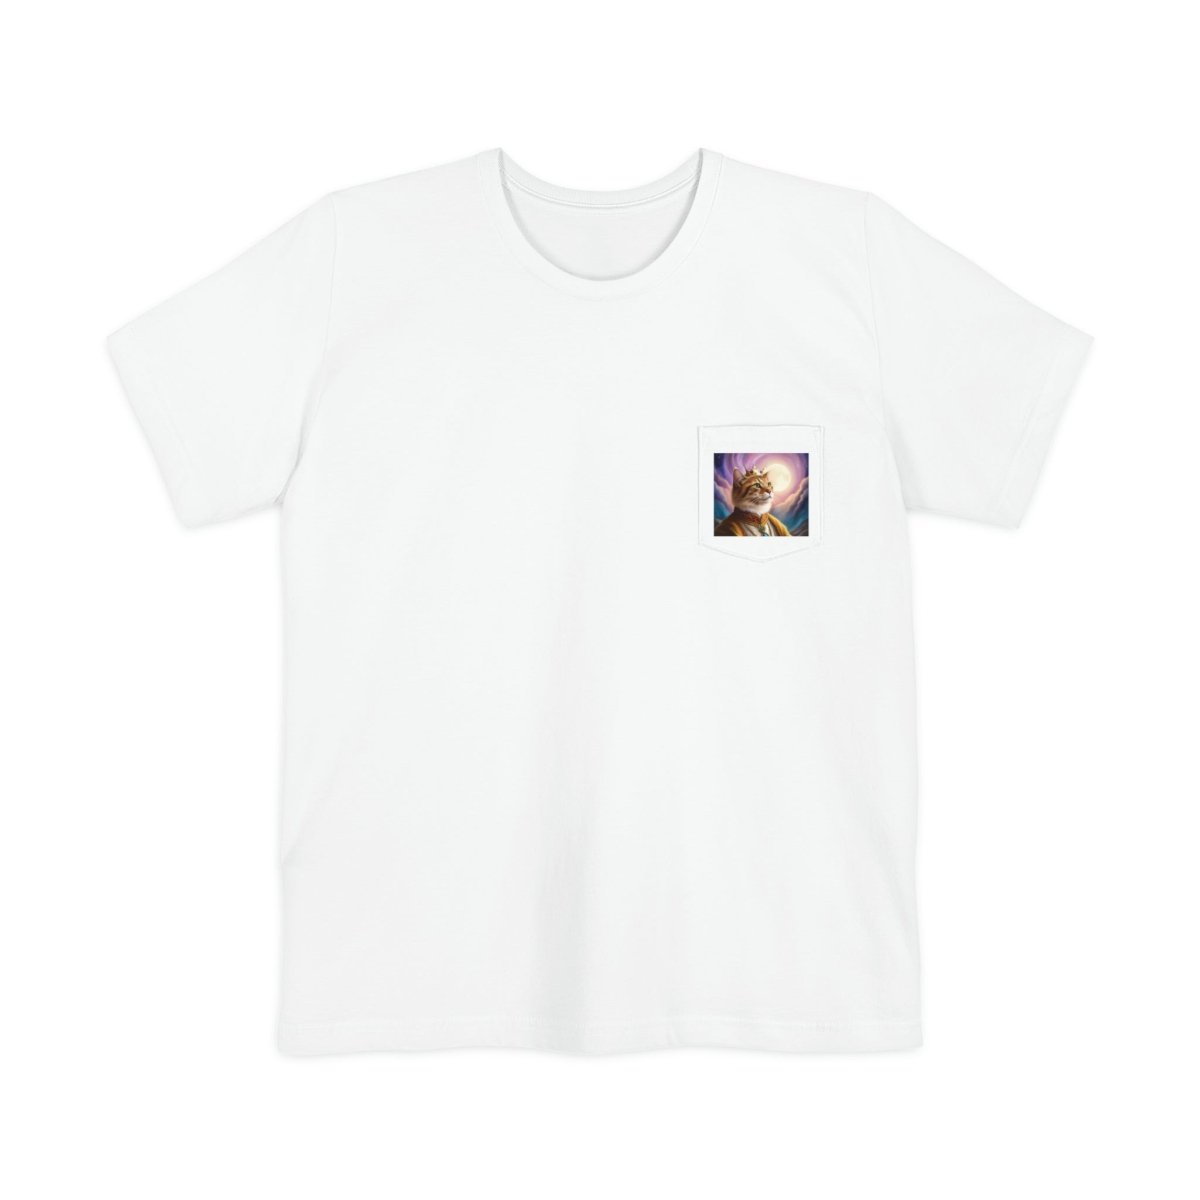 Royal Cat Pocket T-shirt - Style D - DarzyStore